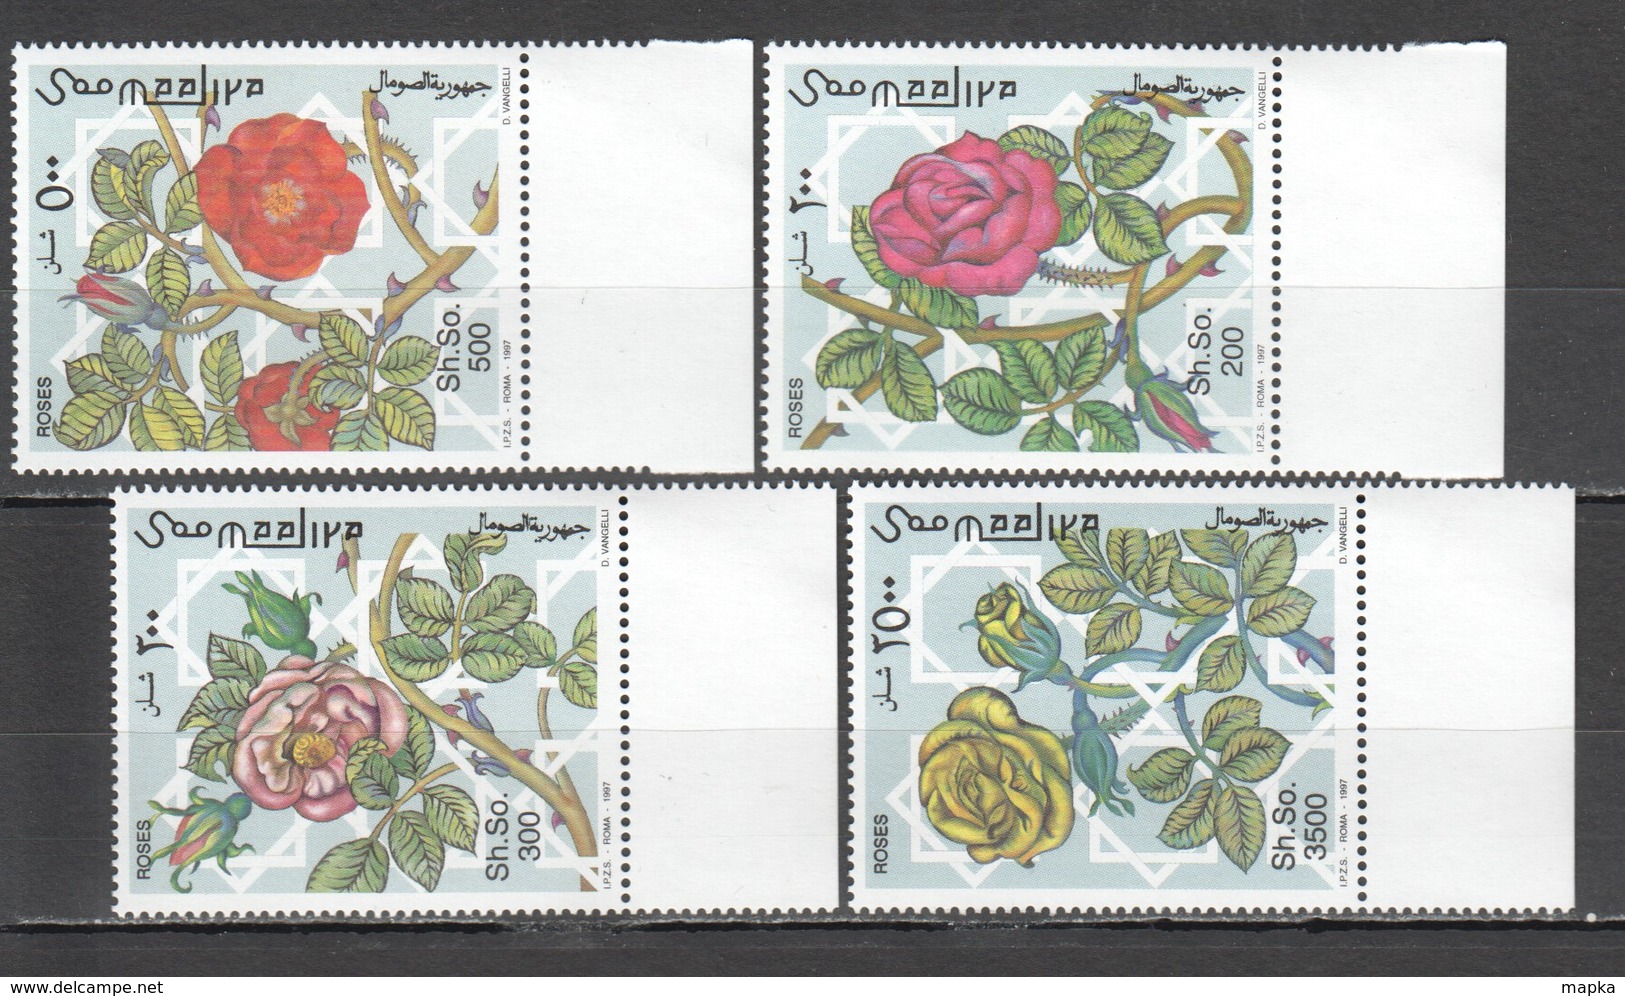 P1517 1997 SOOMAALIYA FLORA FLOWERS ROSES MICHEL 20 EURO 1SET MNH - Rosen